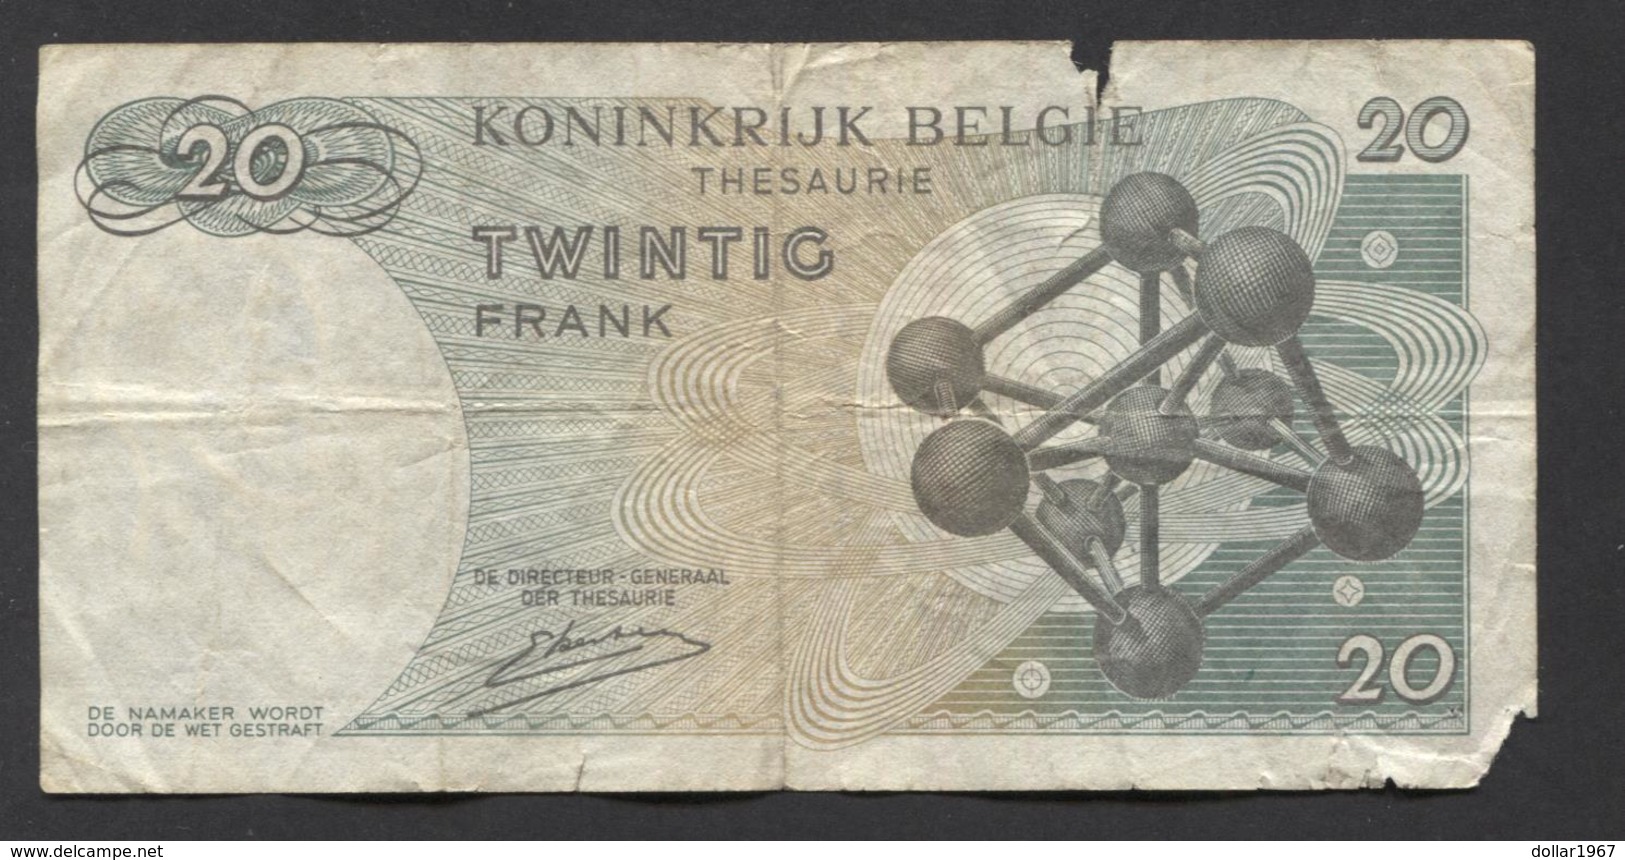 België Belgique Belgium 15 06 1964 -  20 Francs Atomium Baudouin. 3 V 1429200 - 20 Francs